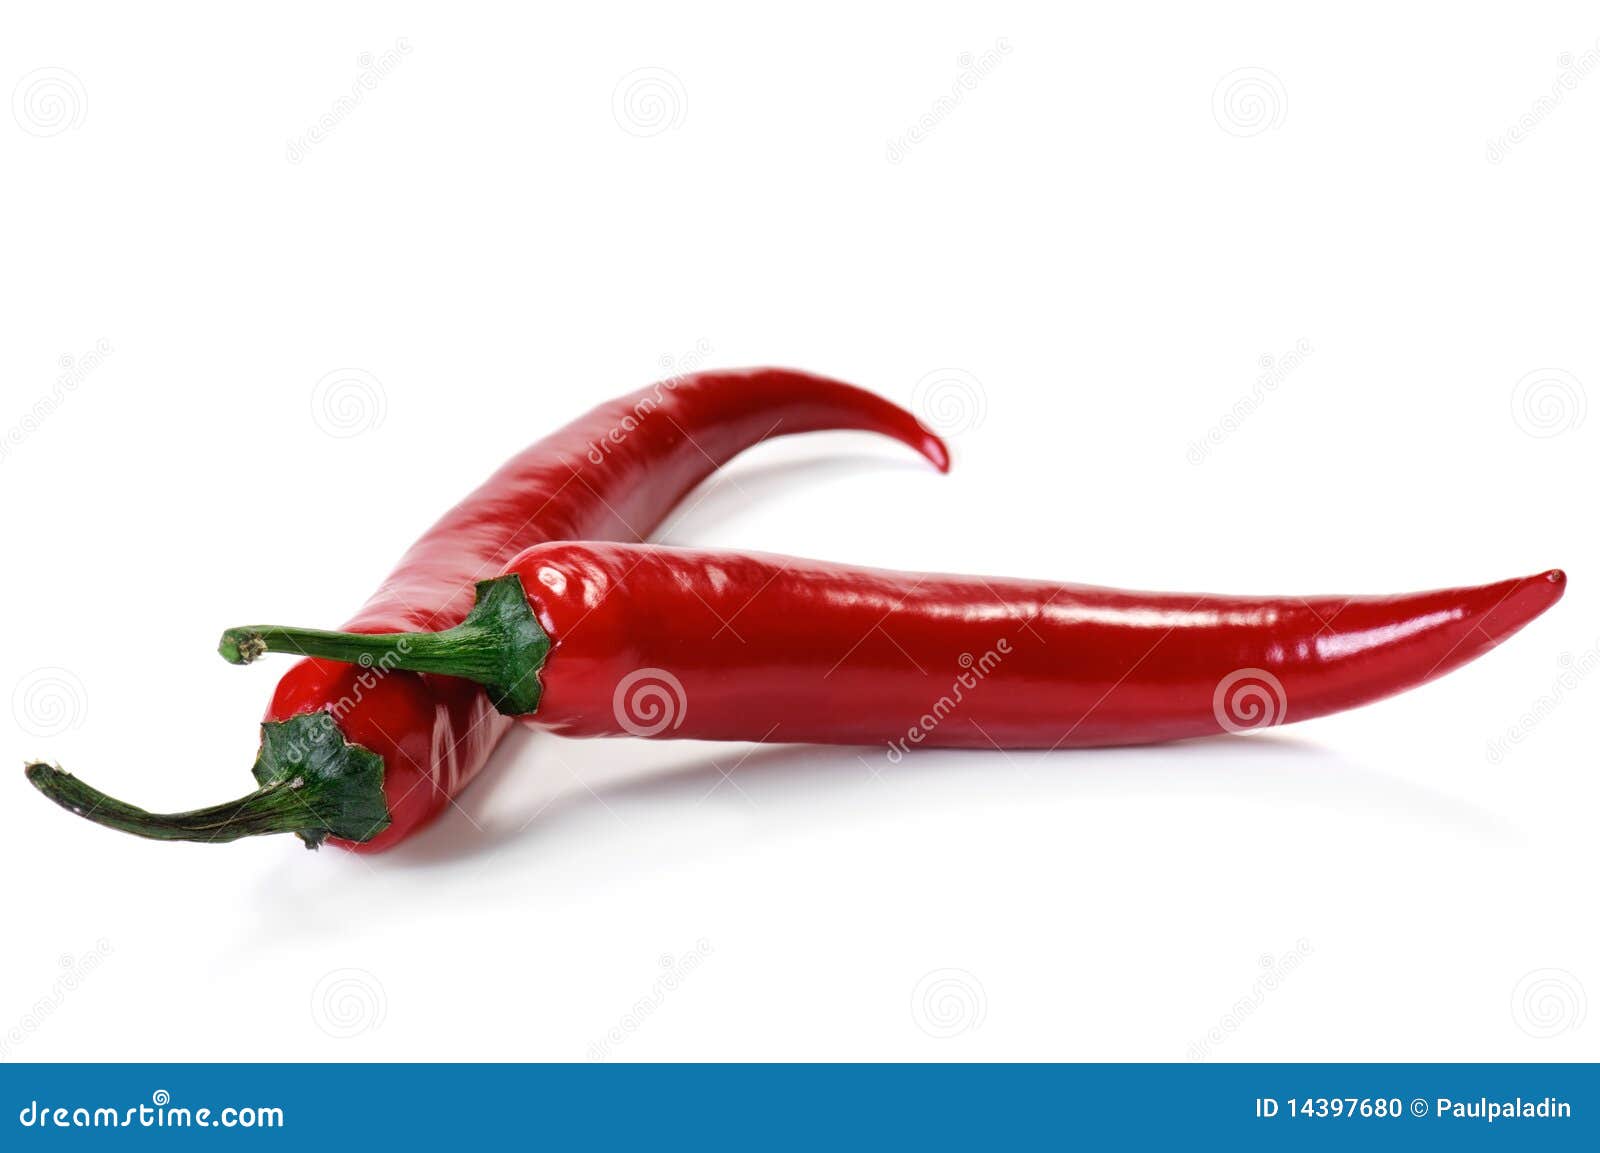 chilli cayenne pepper